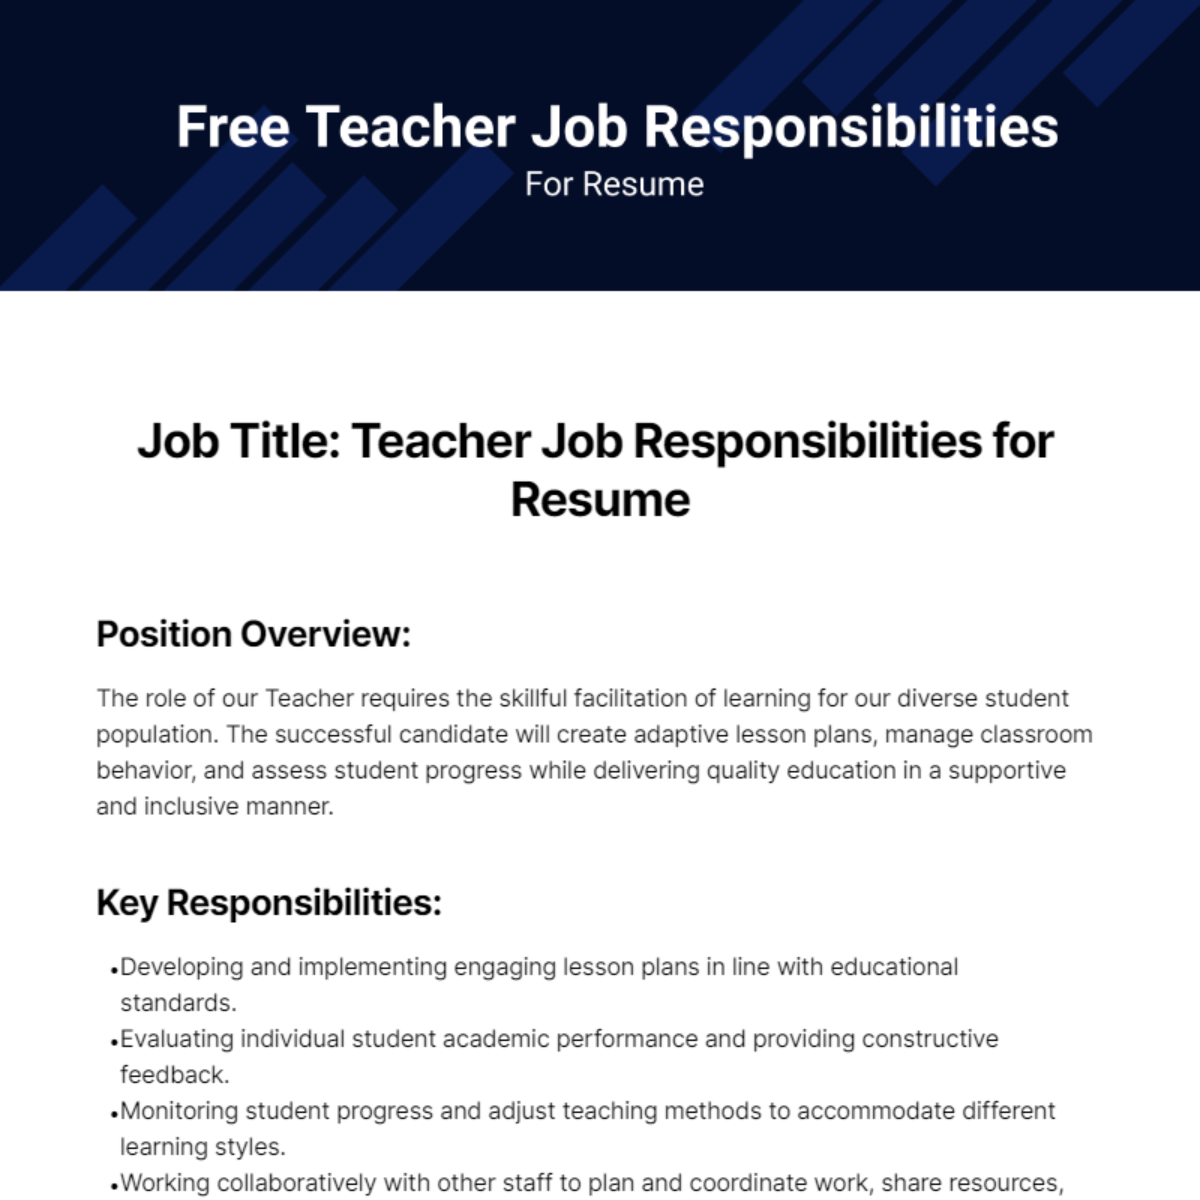 Free Teacher Job Responsibilities for Resume Template